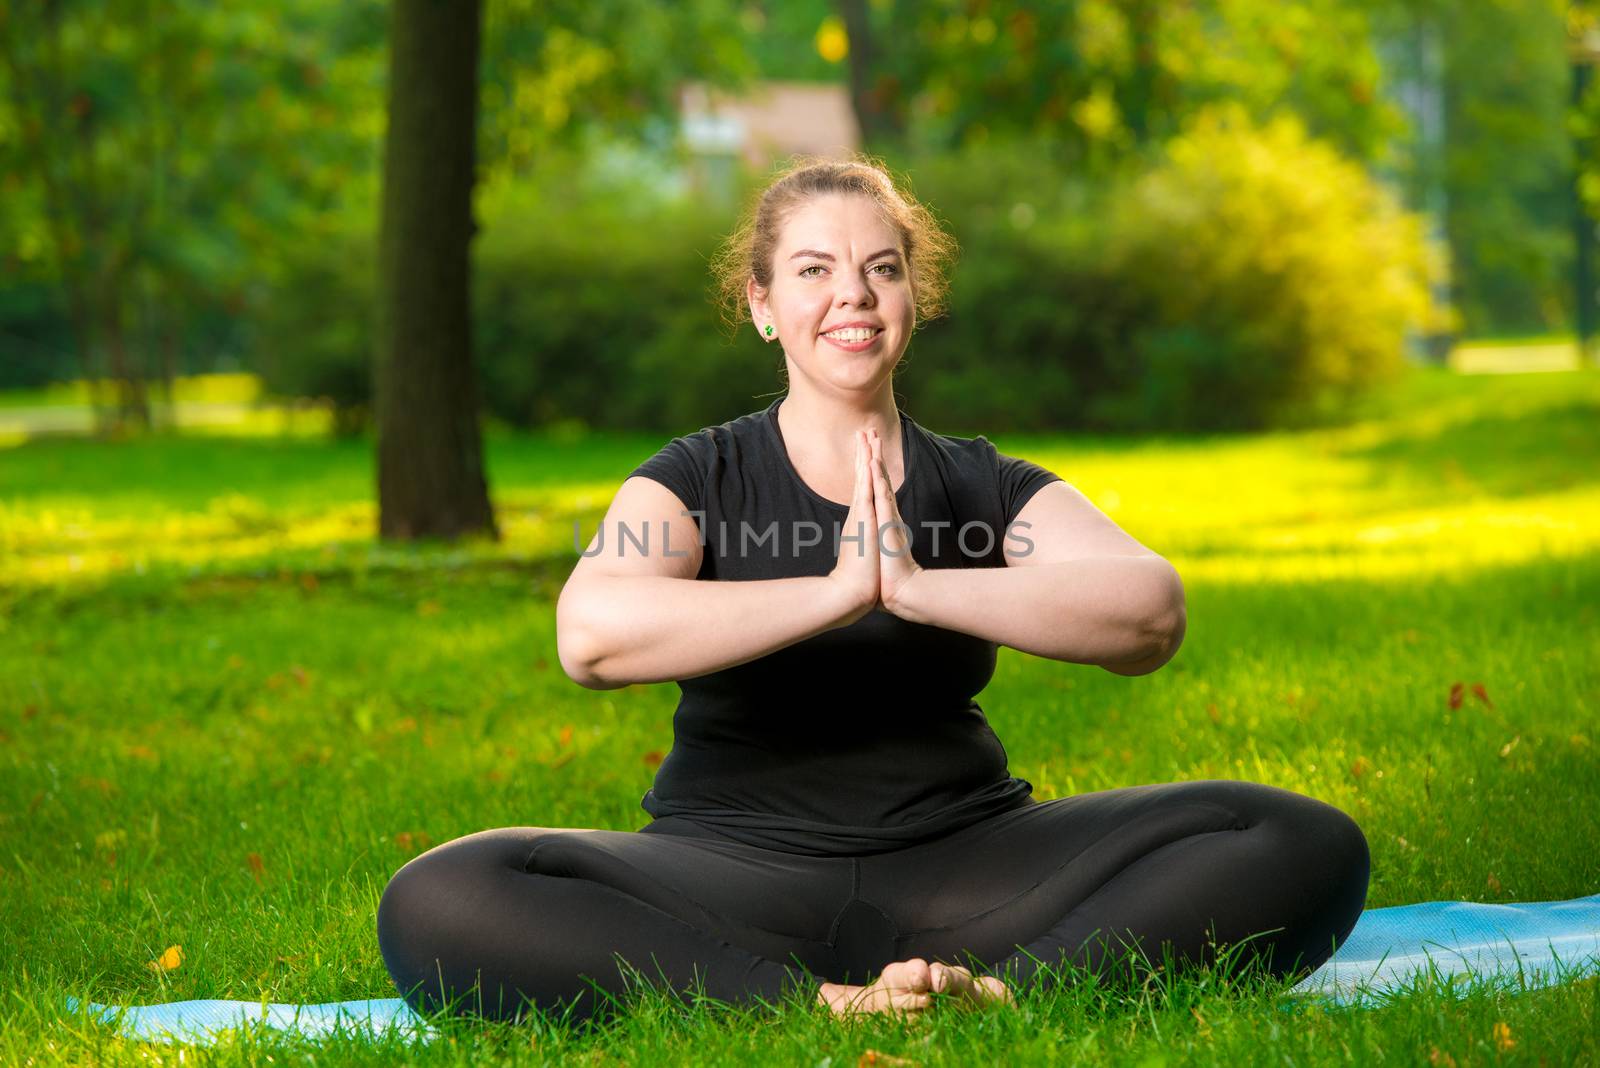 plus size woman posing in park performing exercises in lotus pose